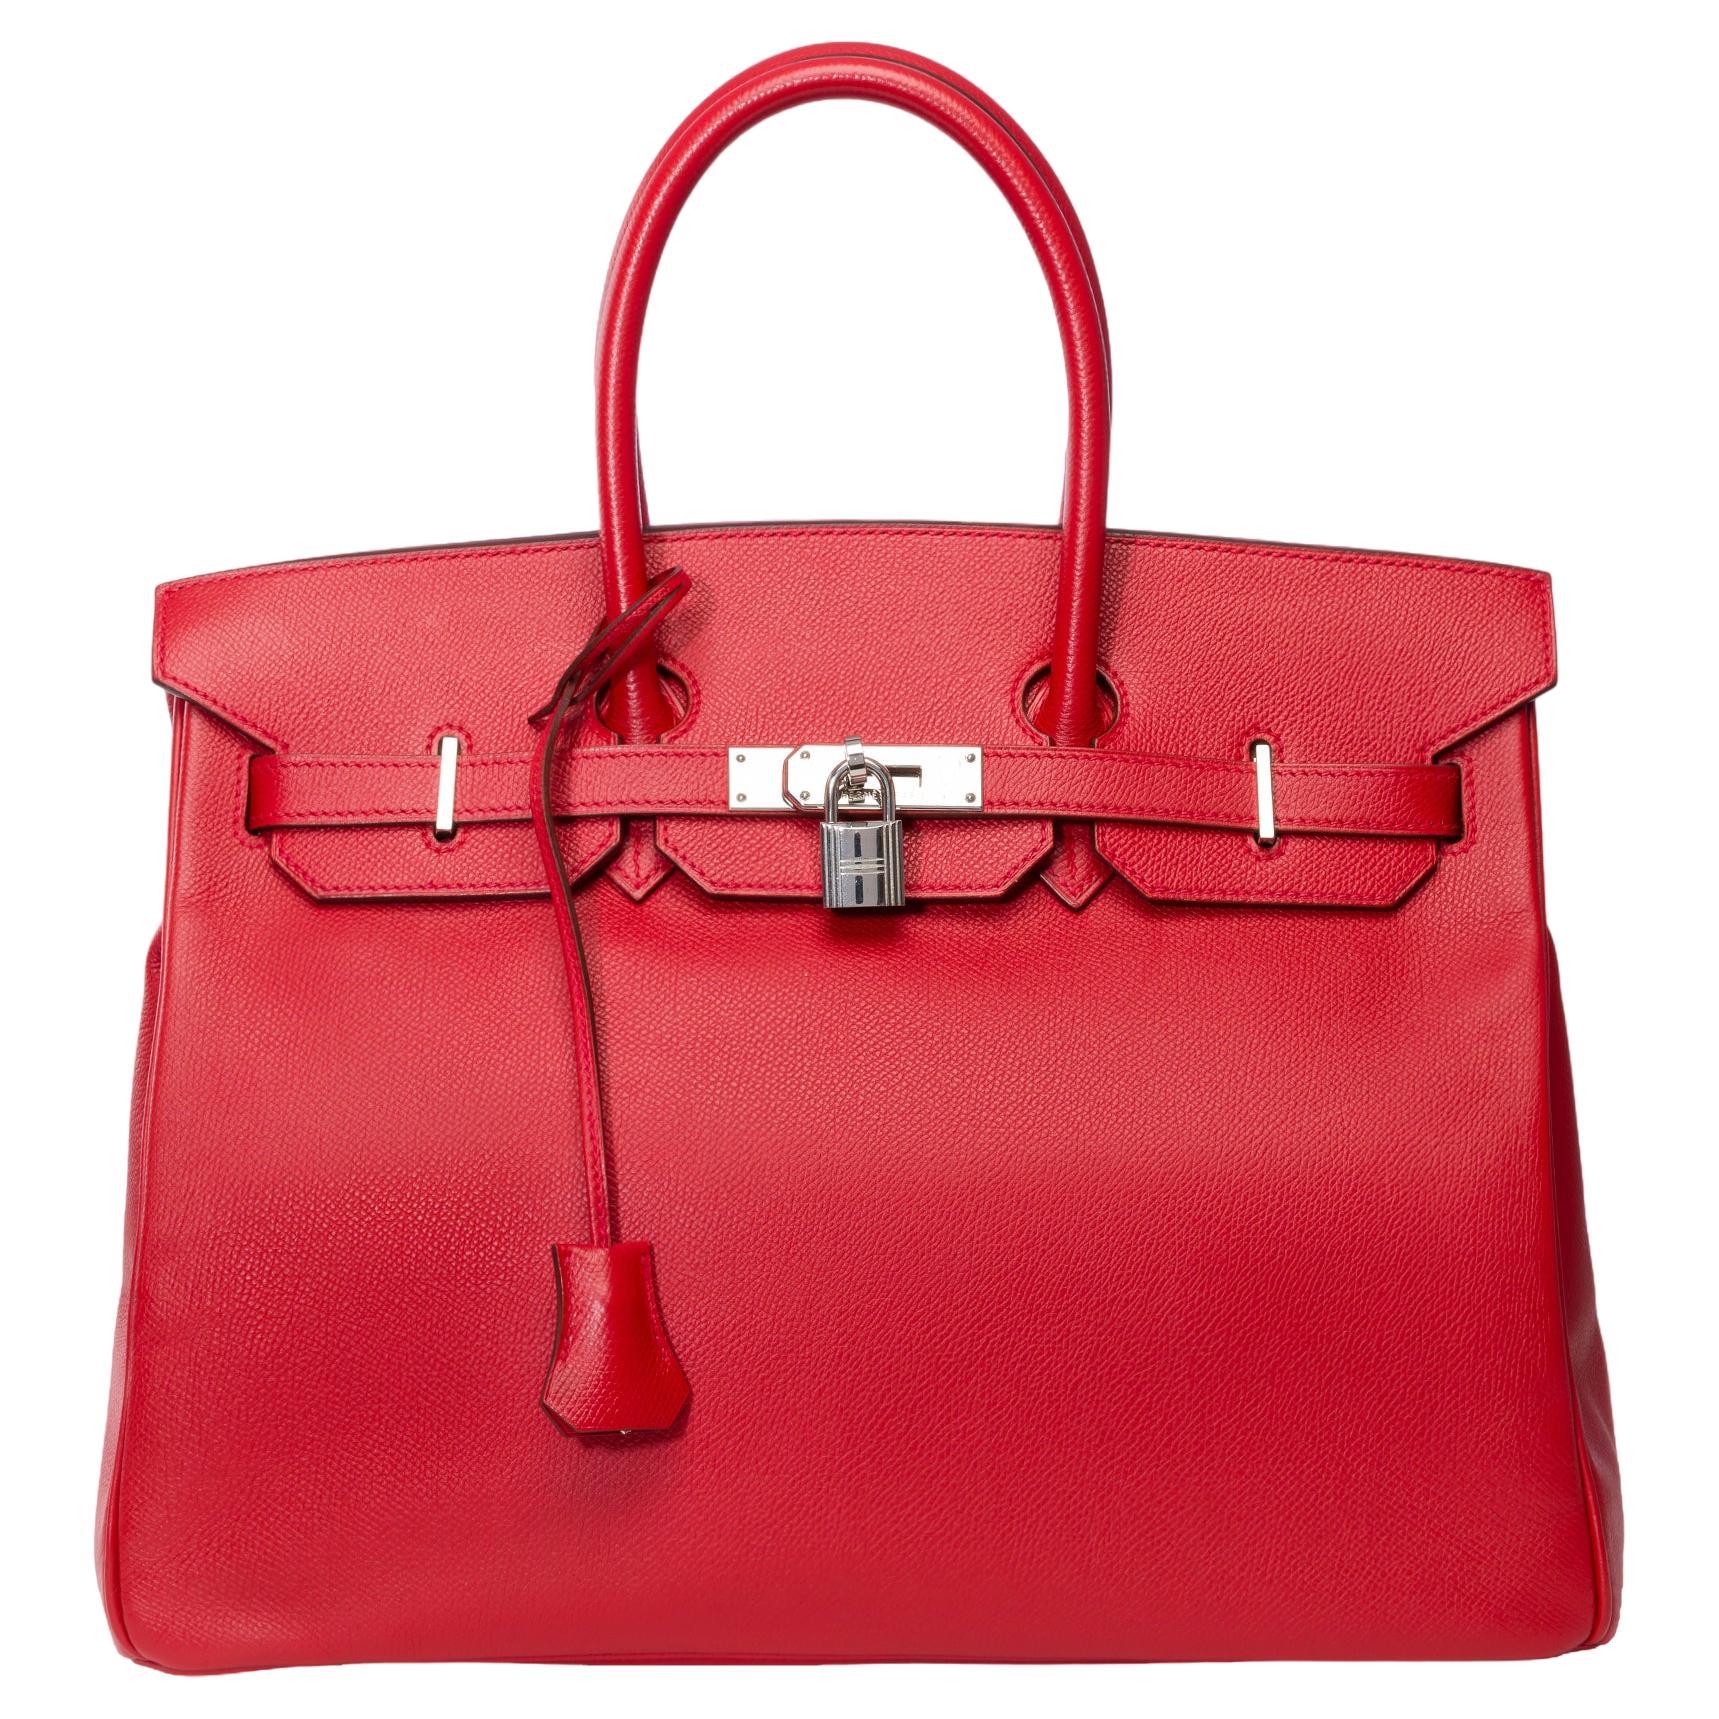 Amazing Hermès Birkin 35 handbag in Rouge Garance Epsom leather, SHW For Sale